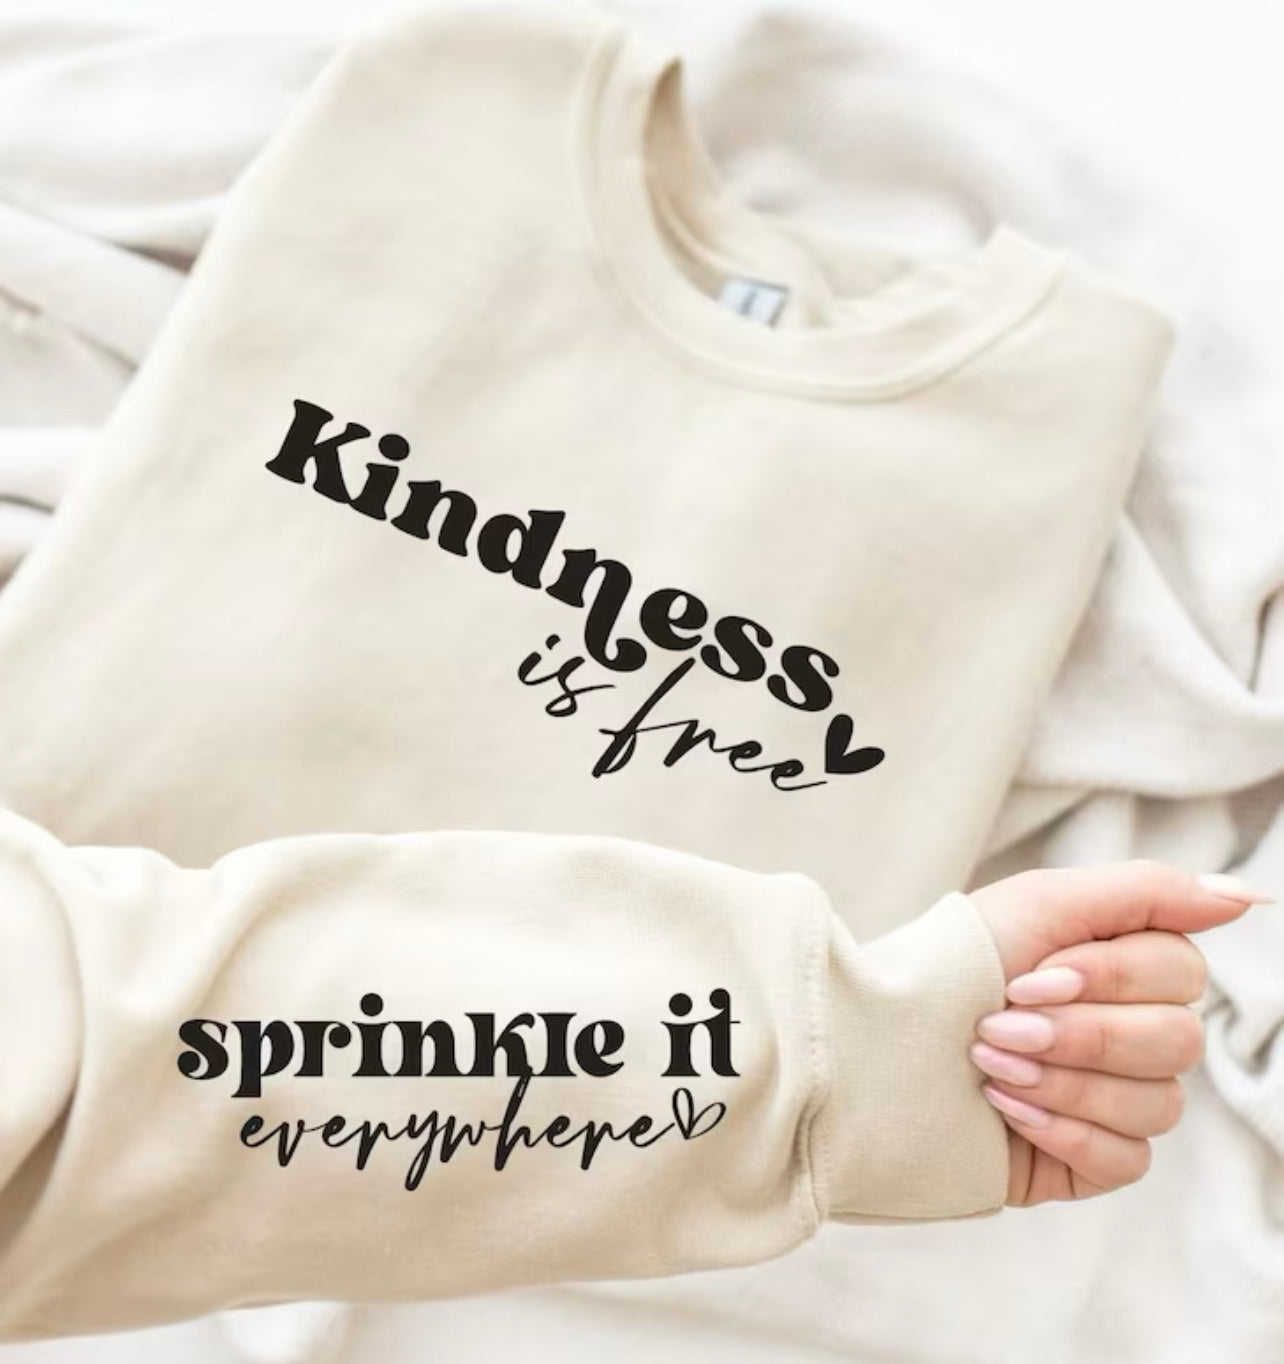 Kindness is Free-Crewneck Sweatshirt